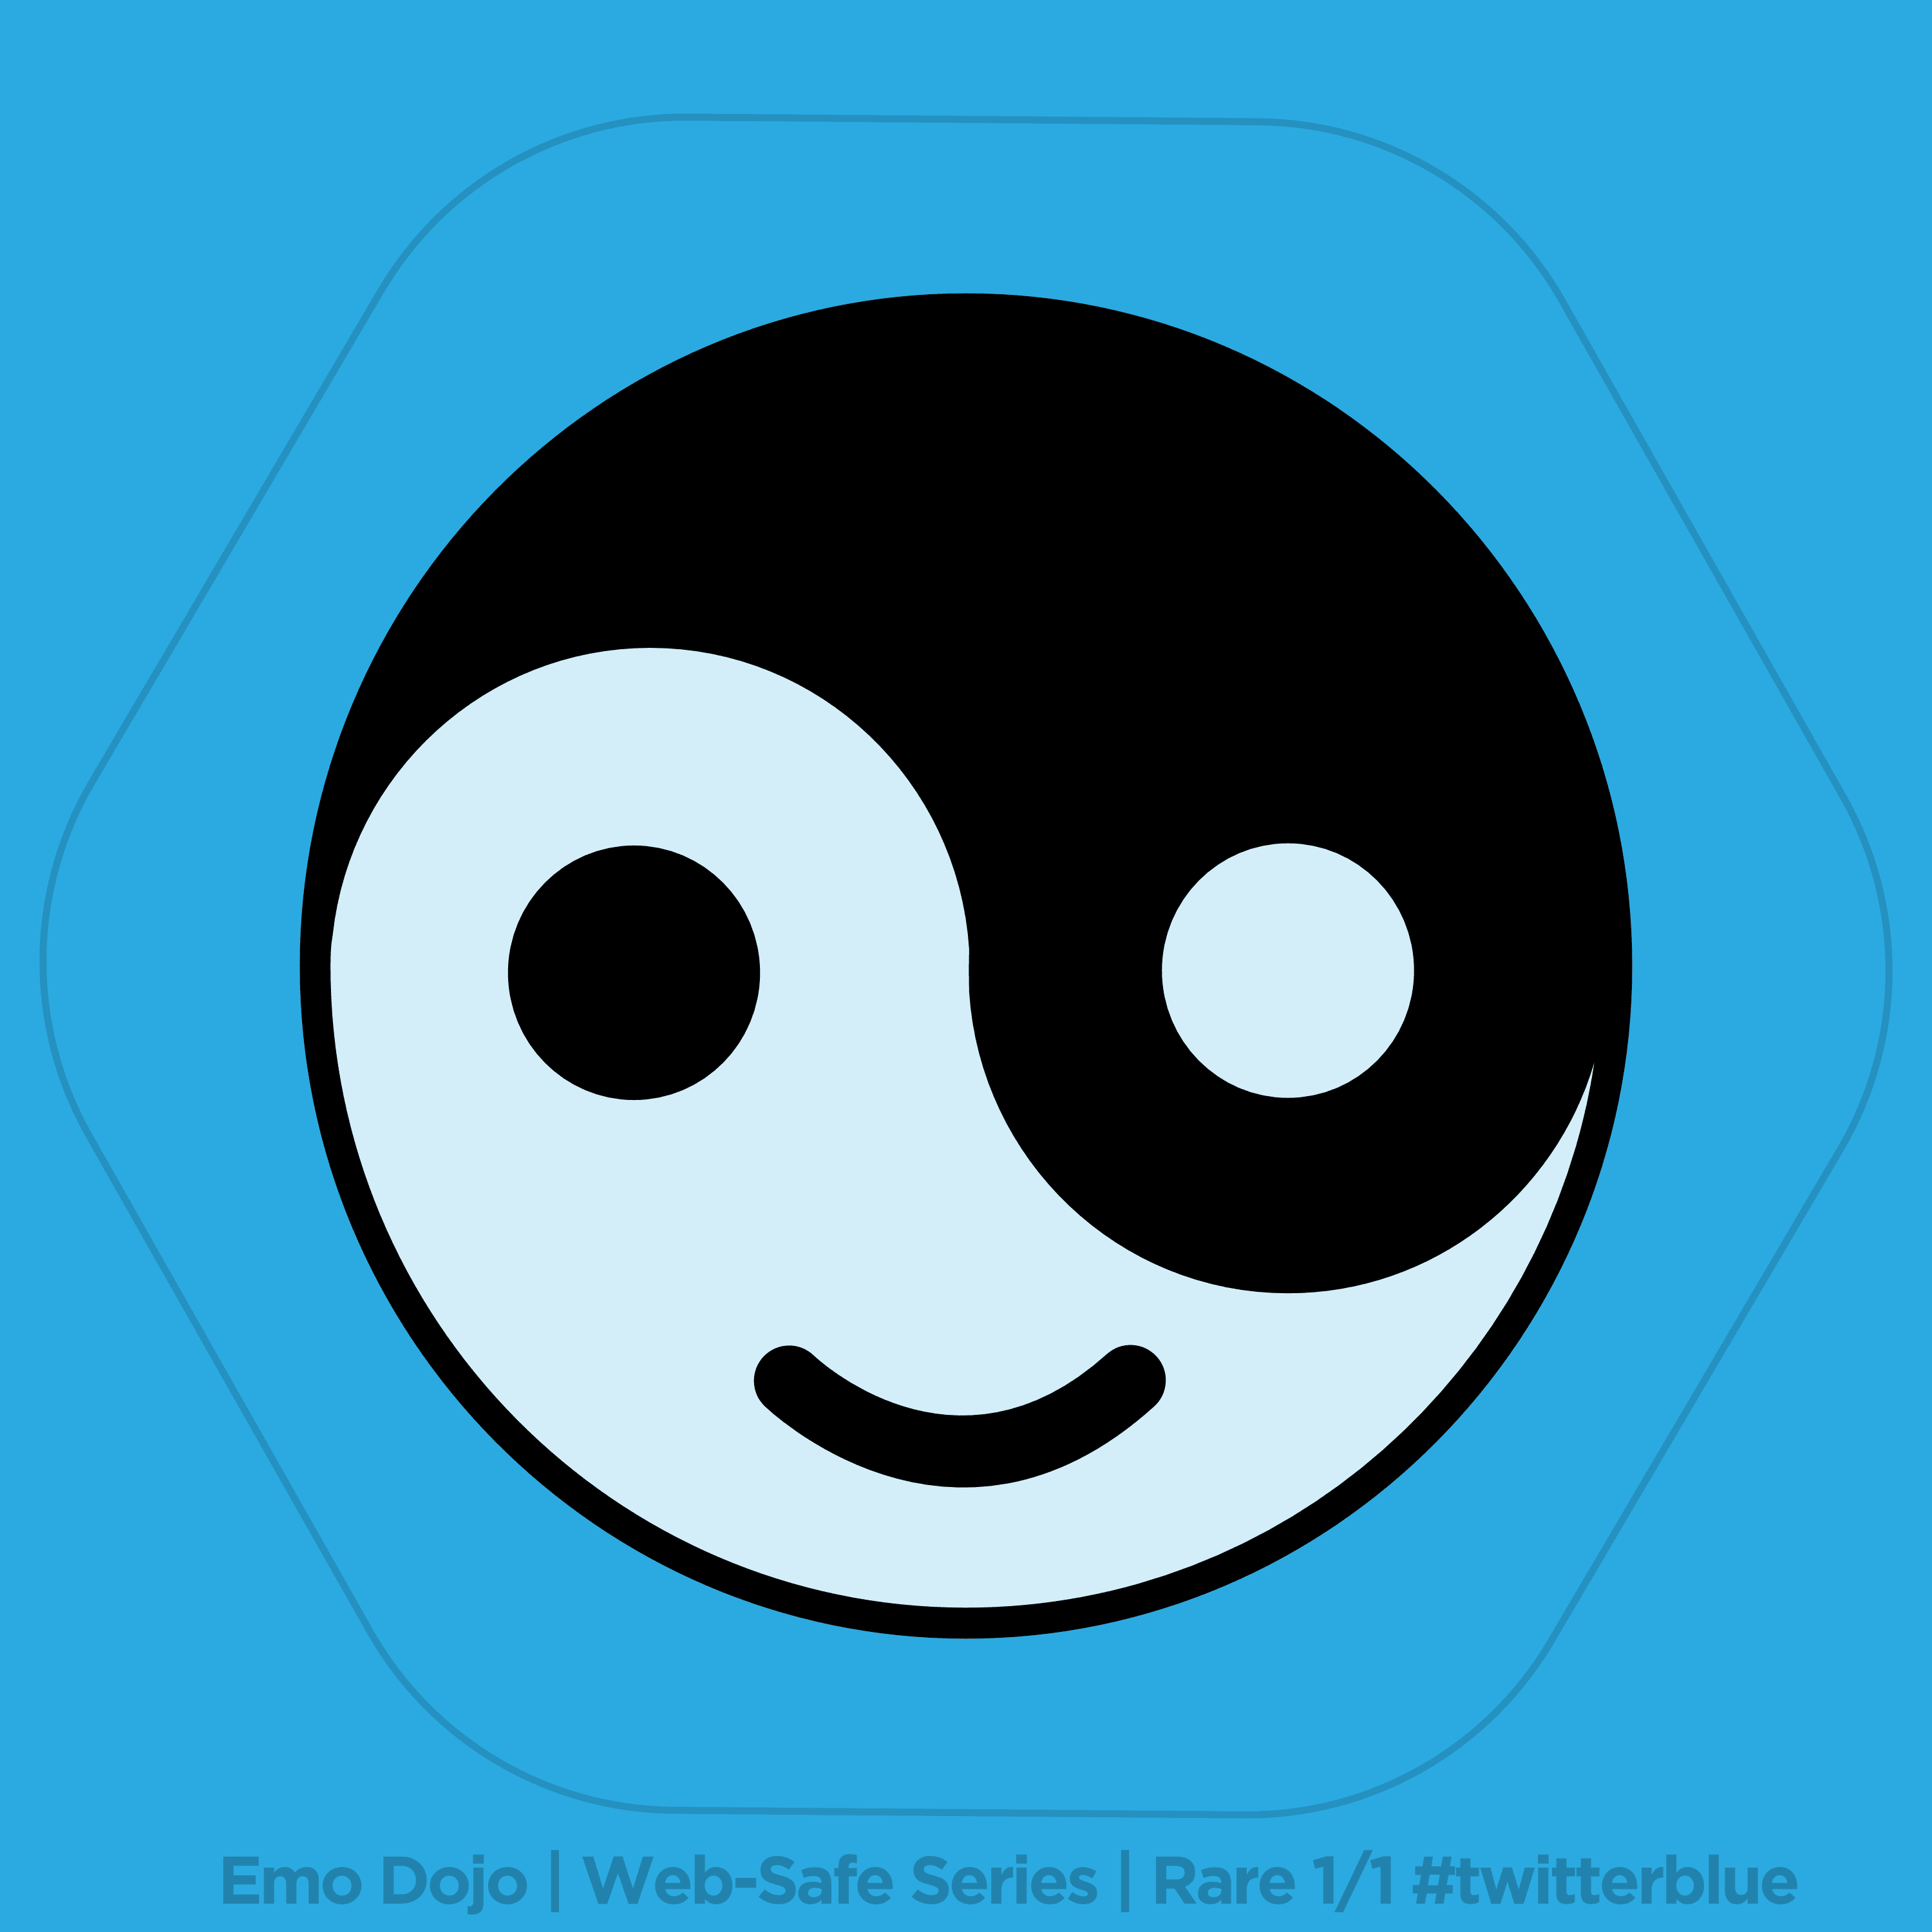 Emo Dojo | Web-Safe Series | Rare 1/1 #twitterblue